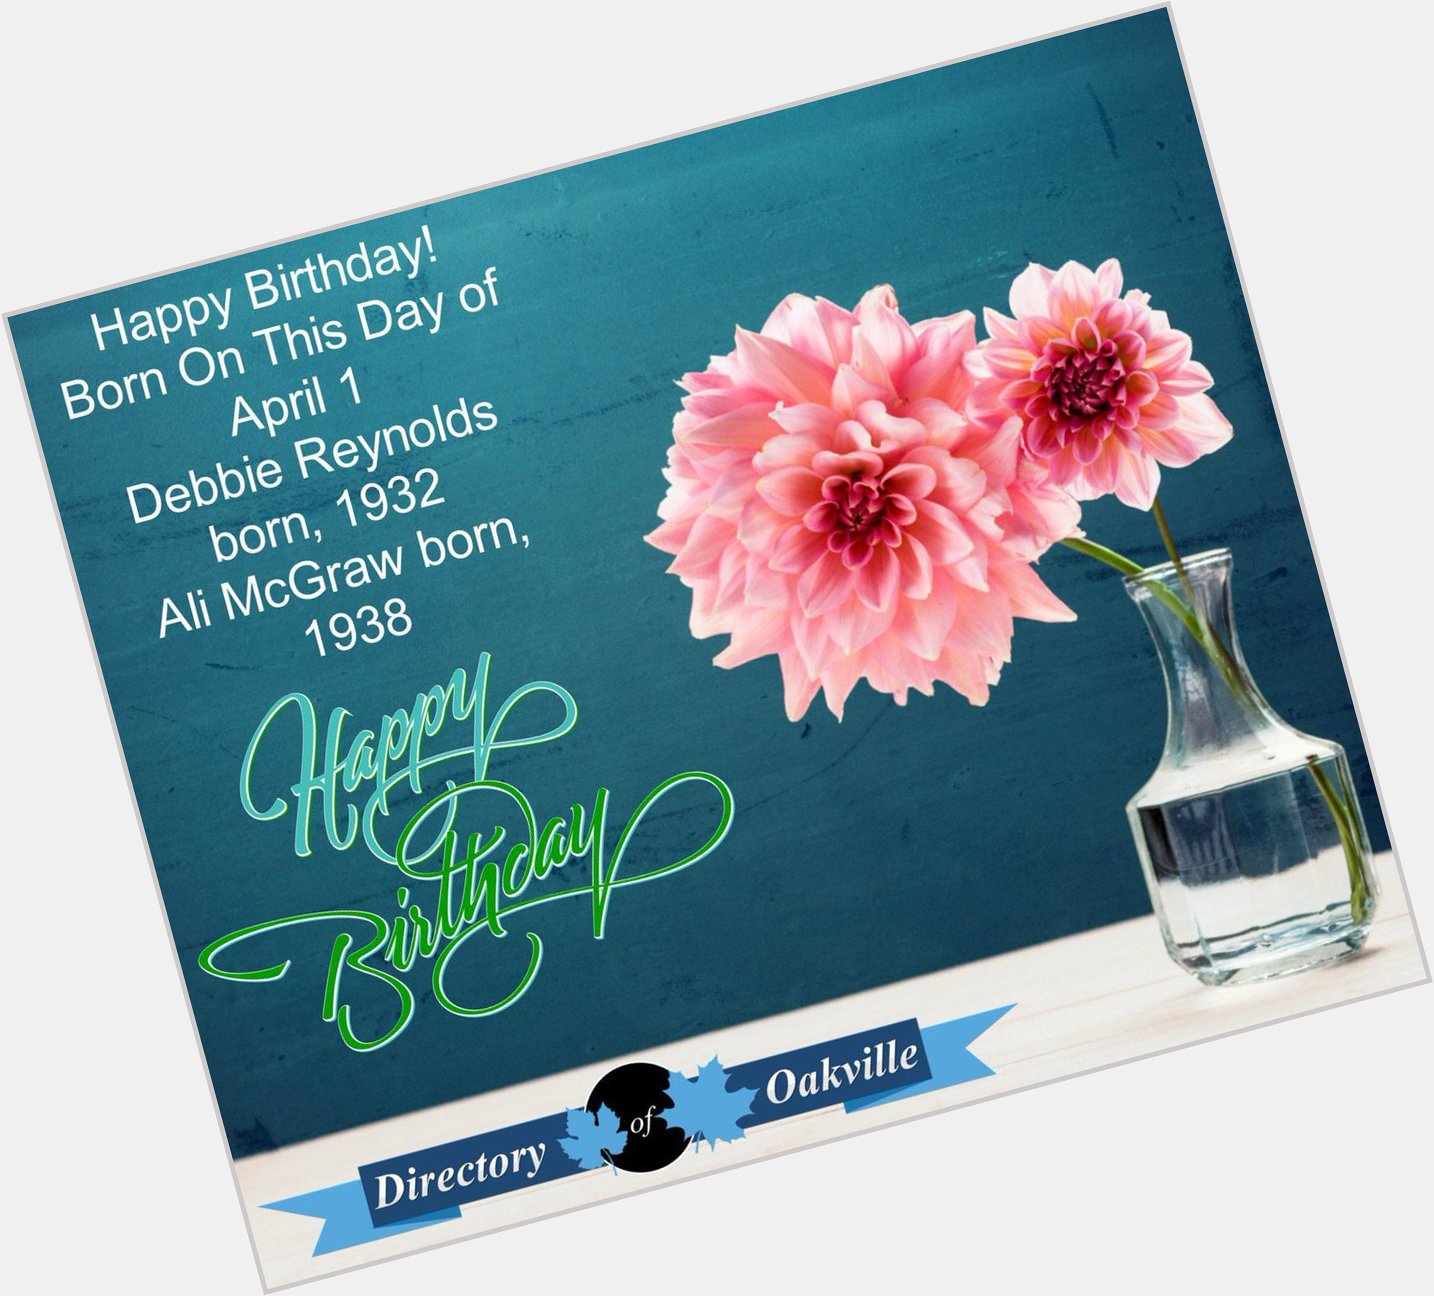 Happy Birthday! Born On This Day of April 1
Debbie Reynolds born, 1932
Ali McGraw born, 1938 